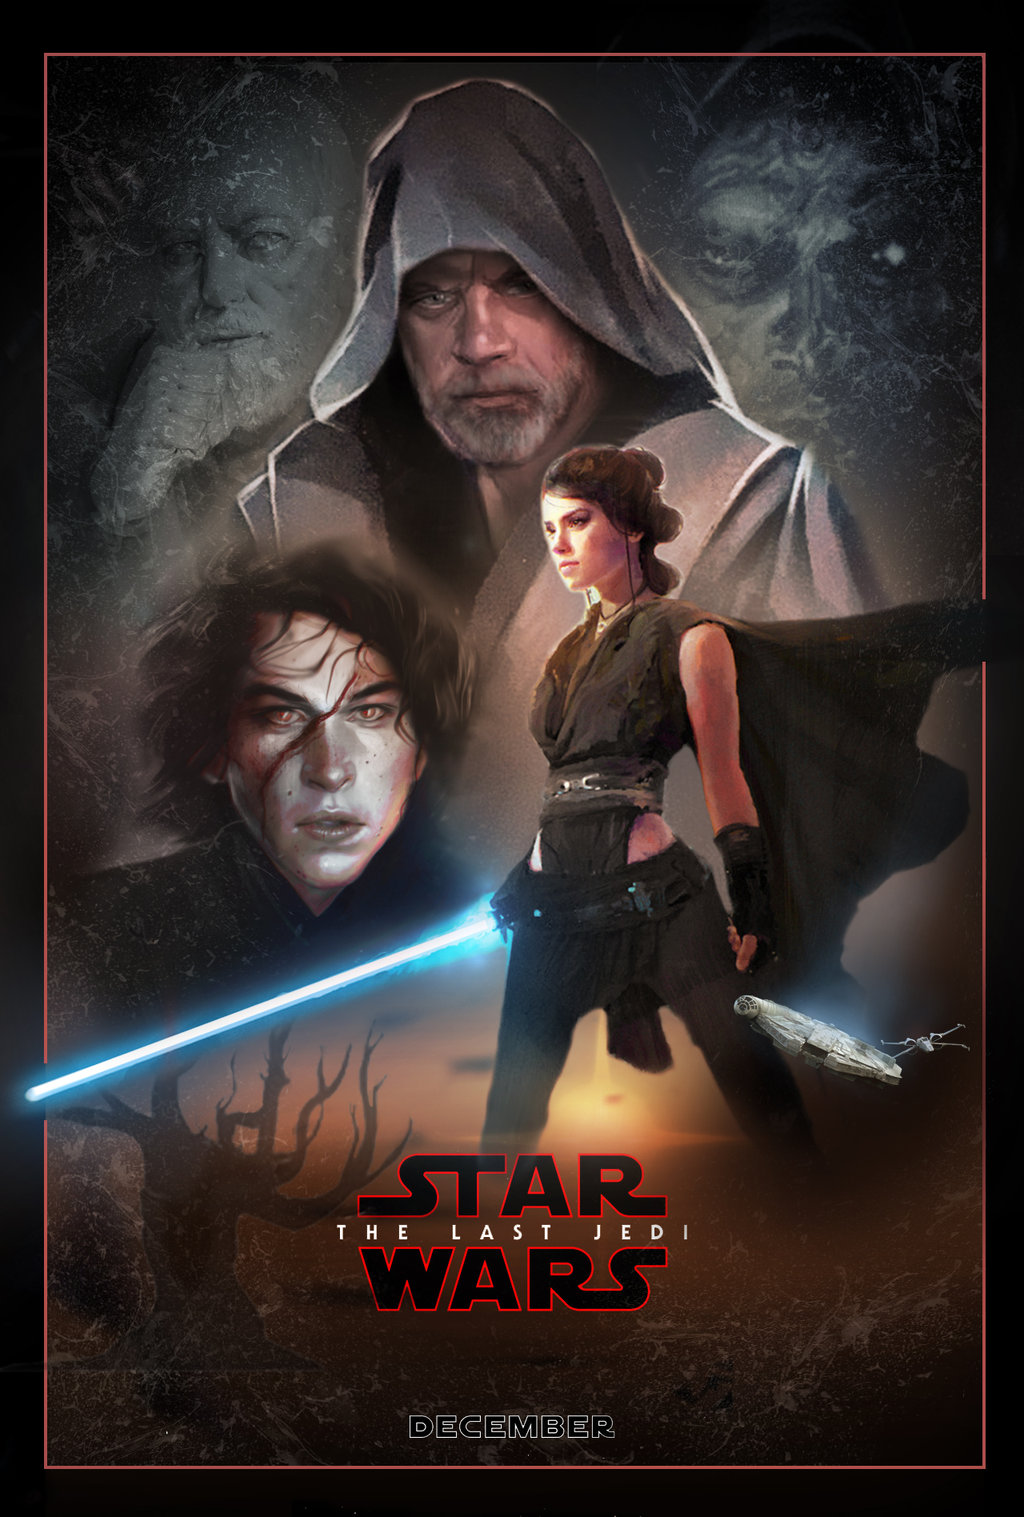 The Last Jedi Poster Wallpaper iPhone